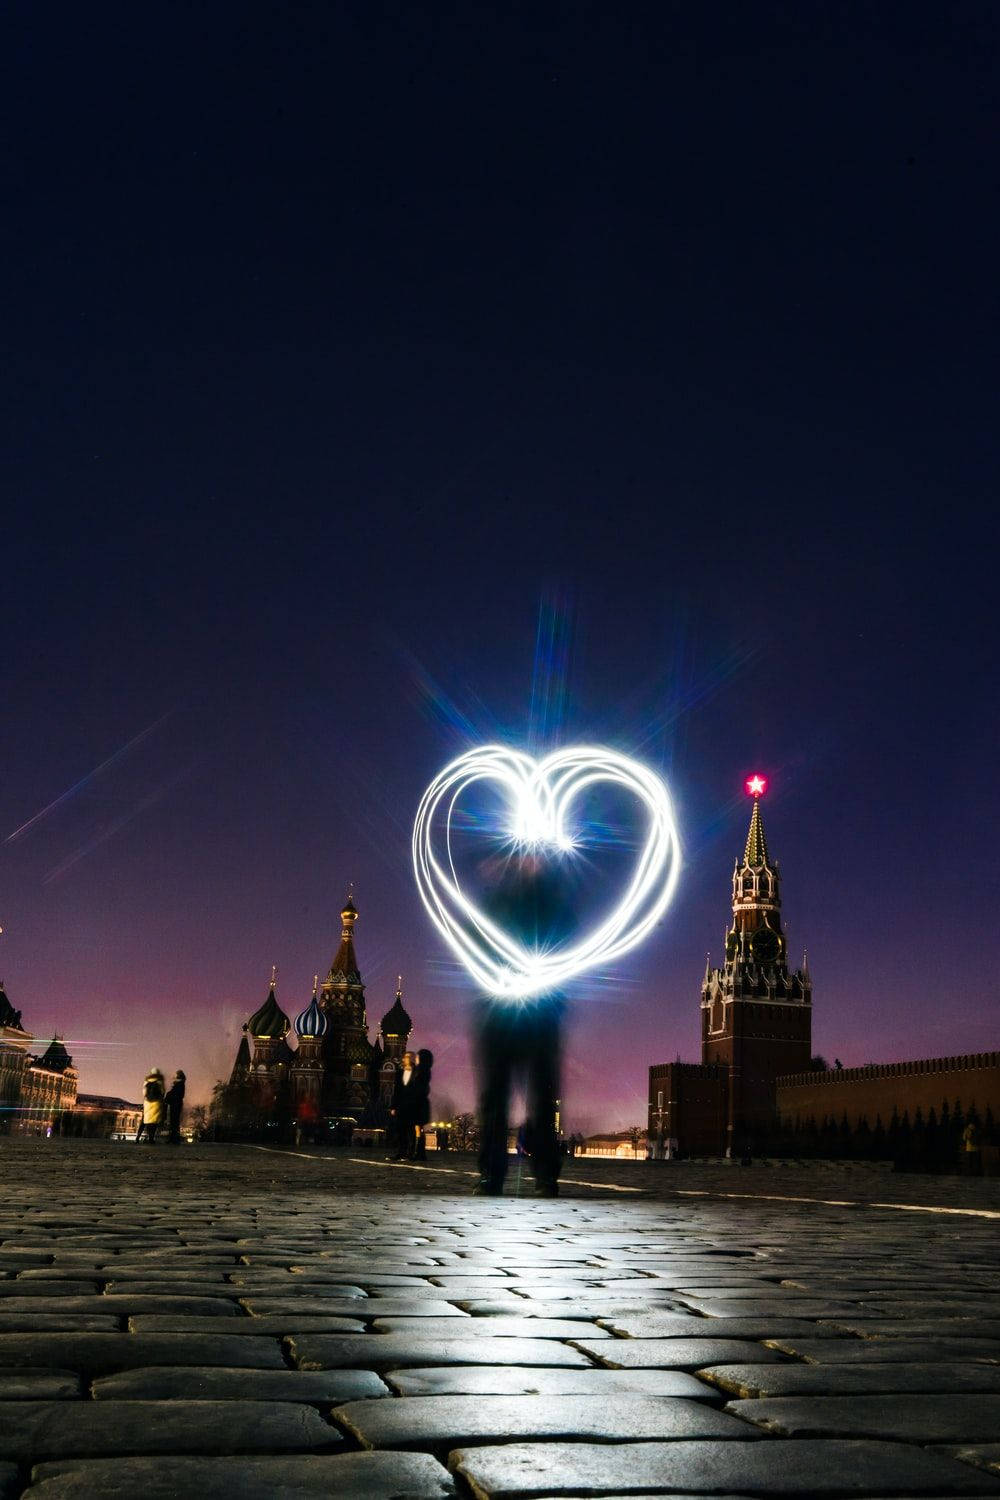 Caption: Illuminated Heart On Indie Phone